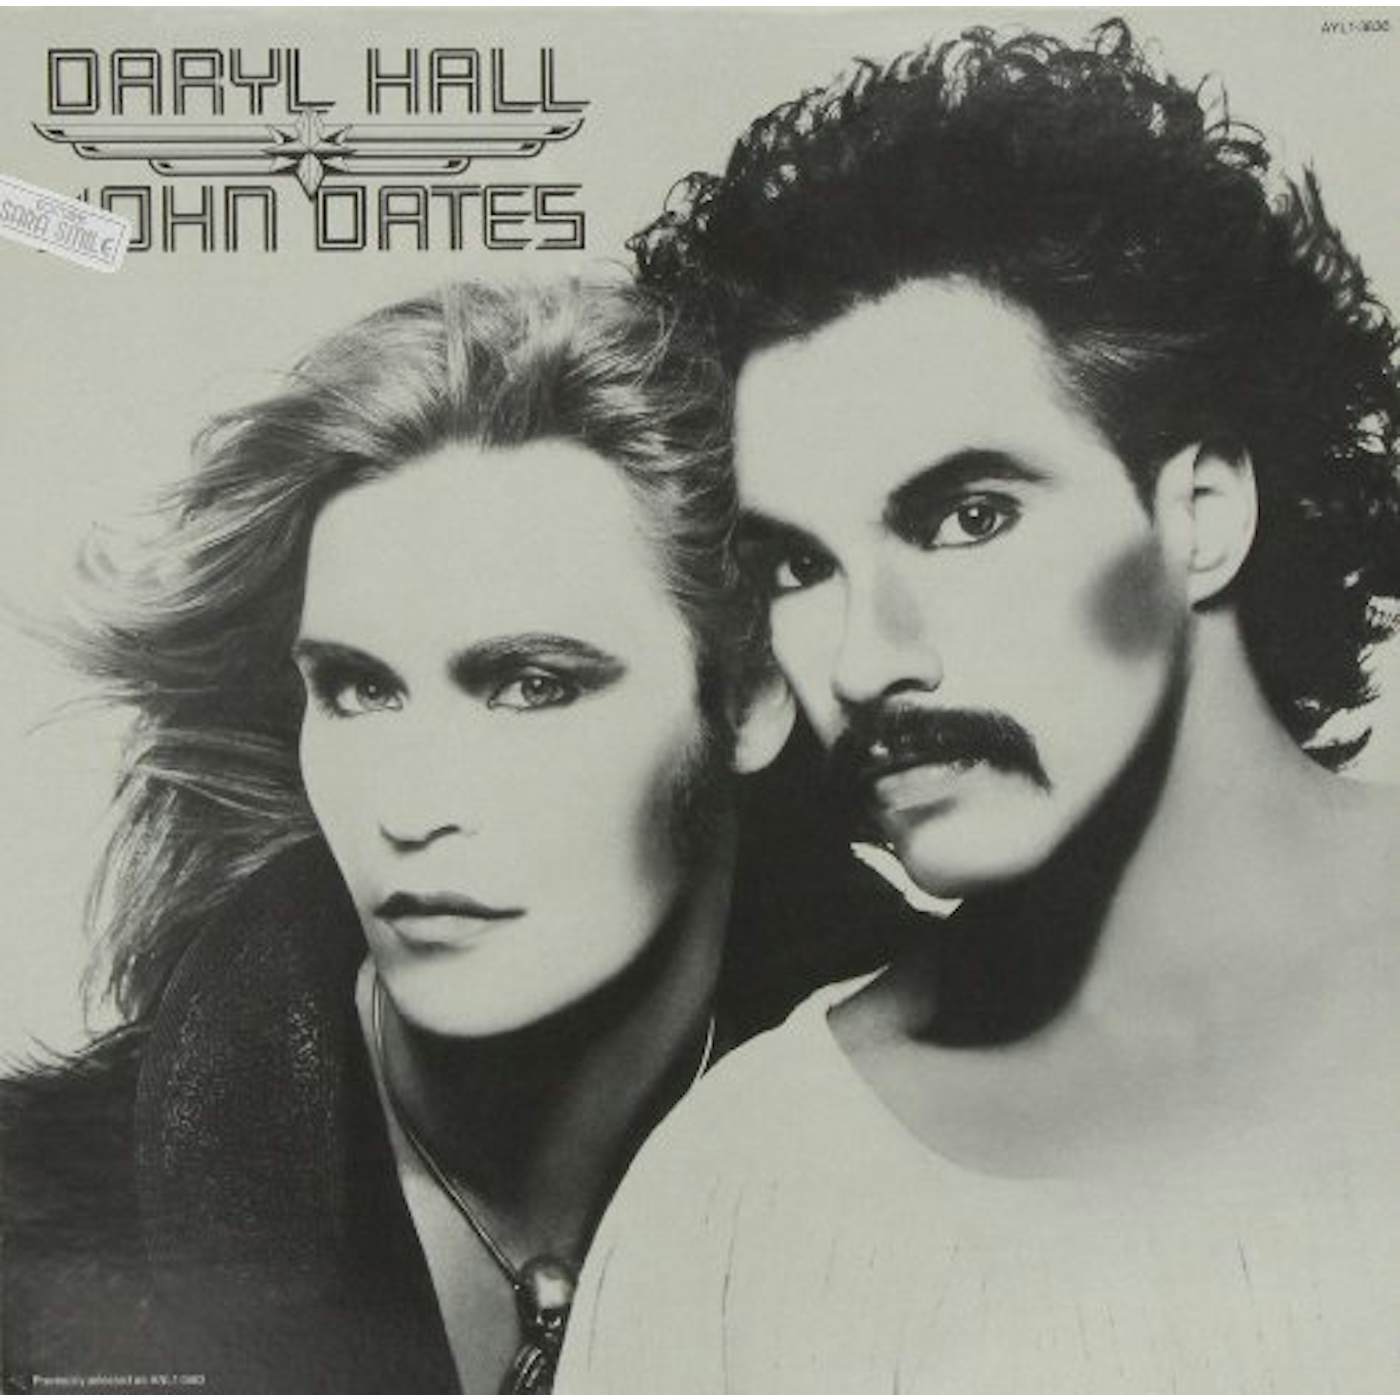 Hall & Oats DARYL HALL & JOHN OATES (SARAH SMILE) Vinyl Record